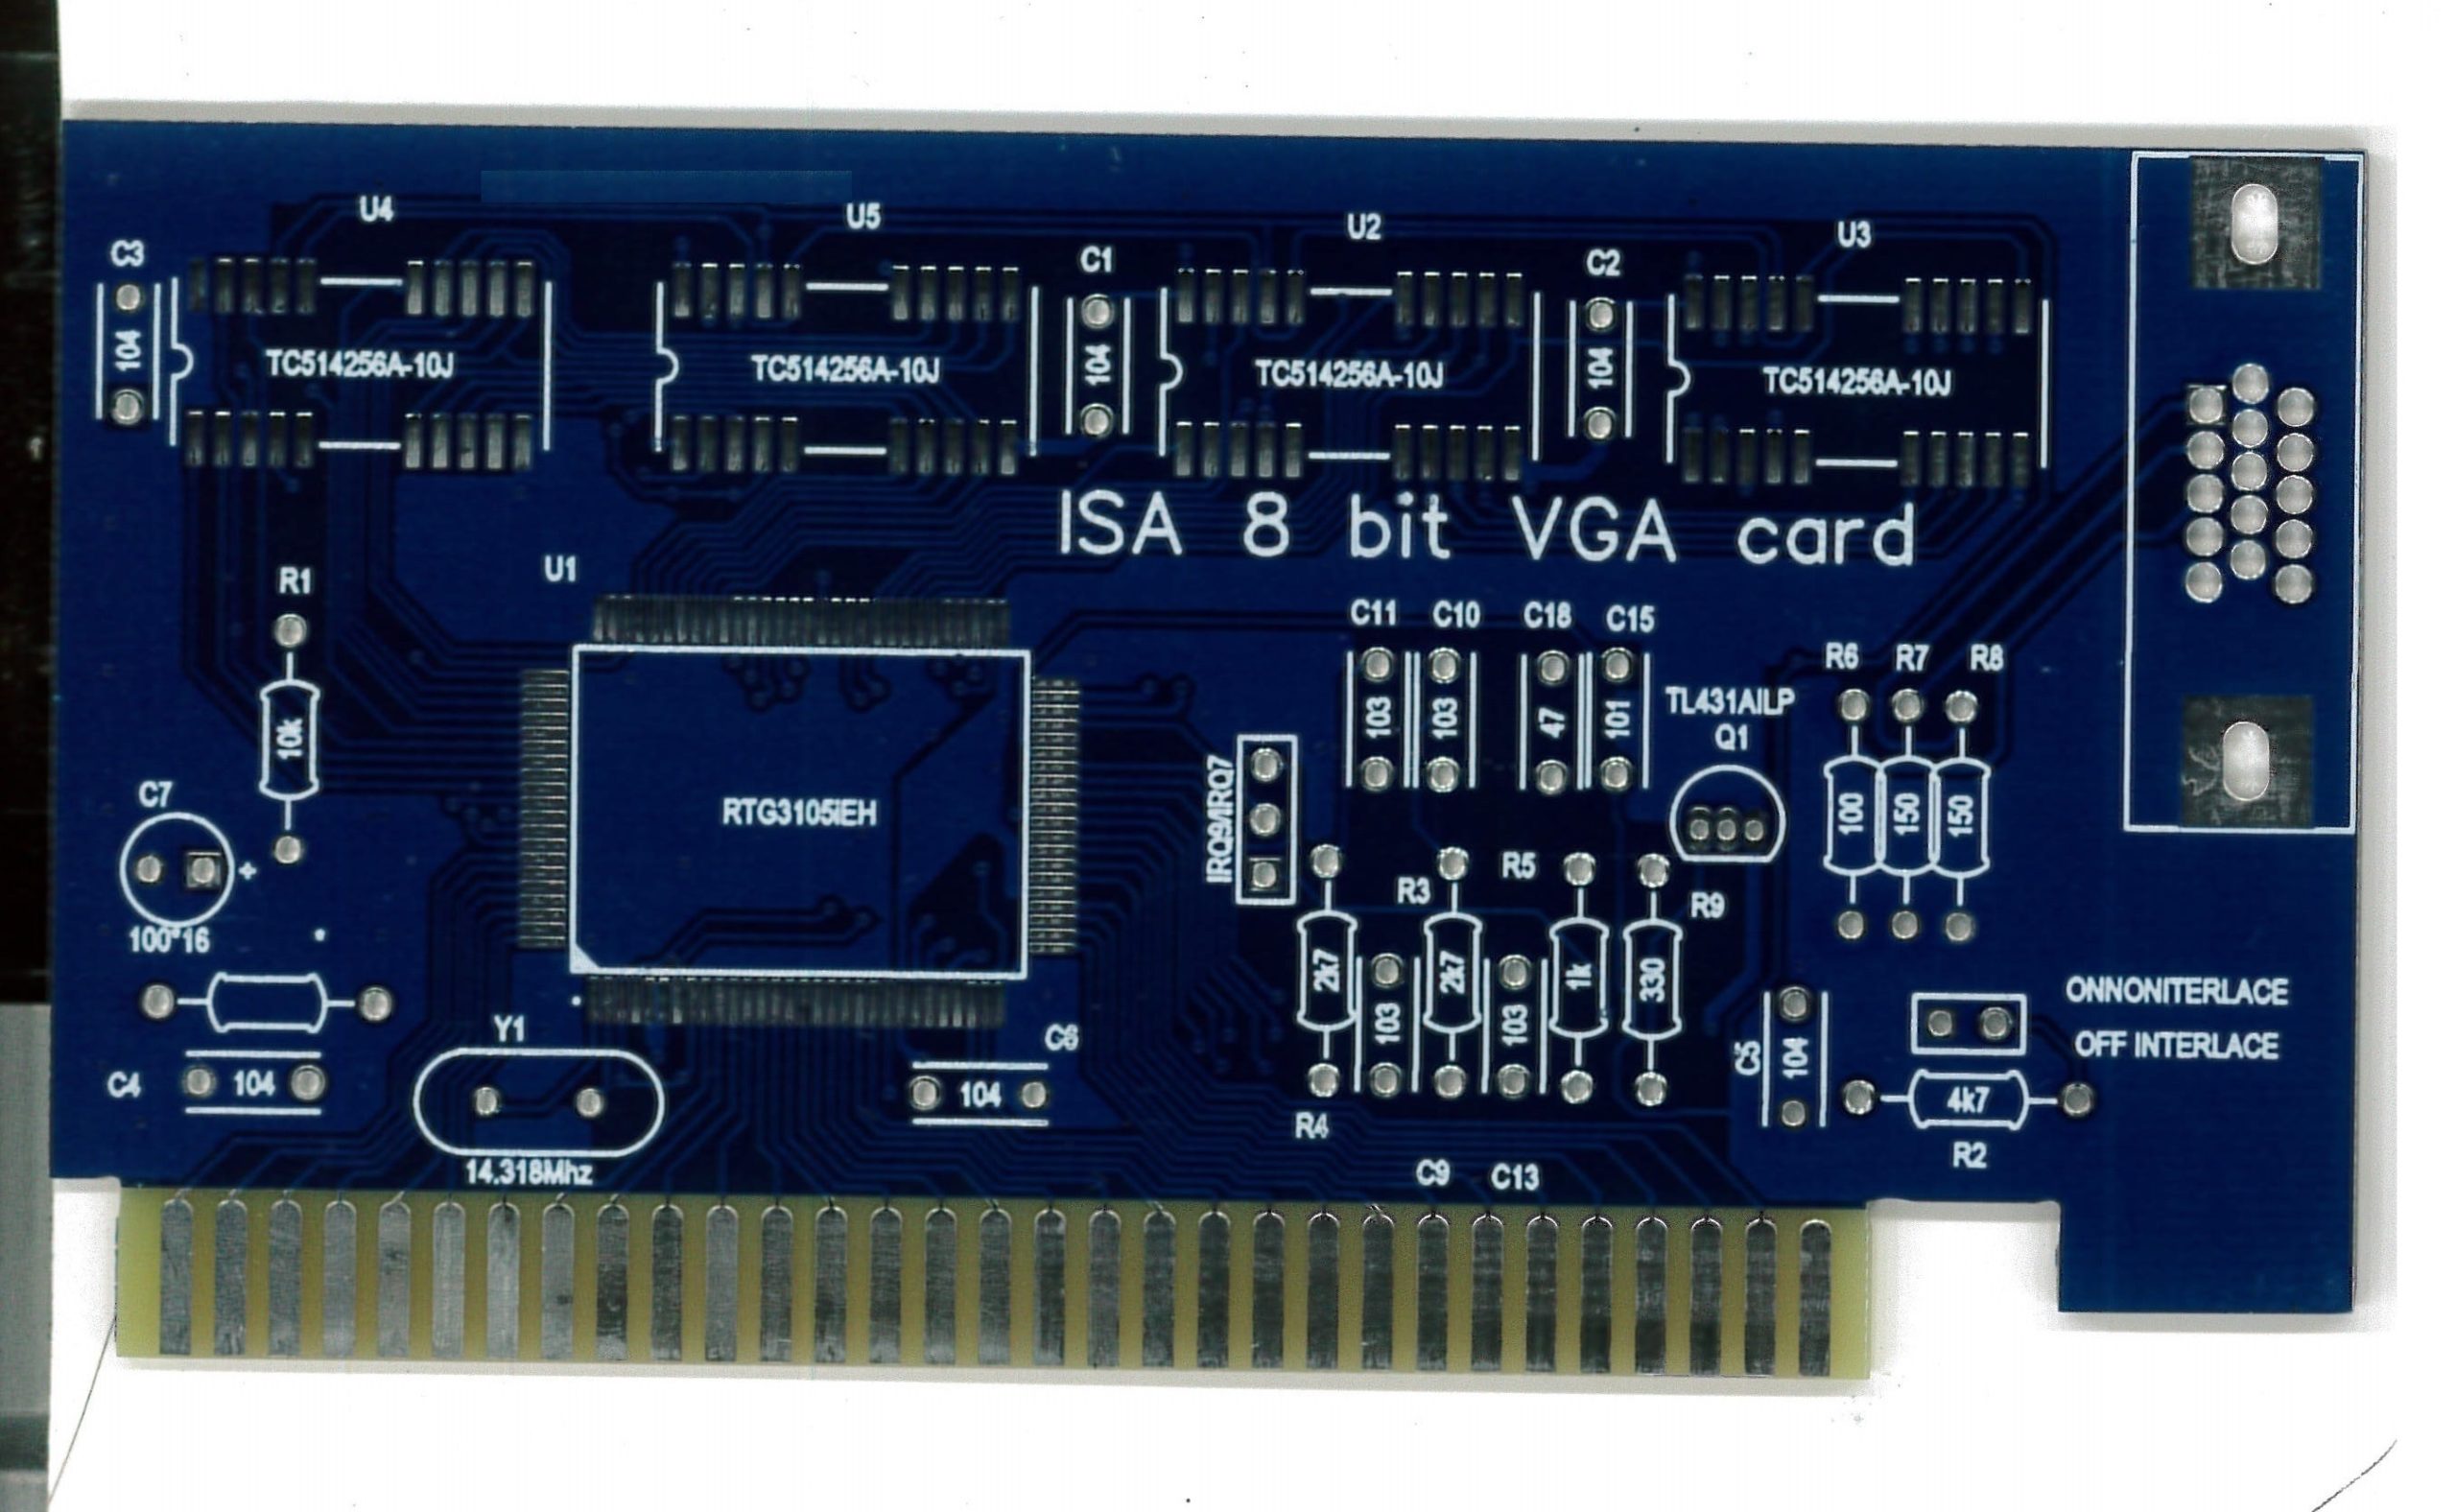 8 бит часы. VGA Isa 8bit. VGA Trident 9000 Isa. Видеокарта Isa 8 bit. Isa 8bit VGA Card on AVR.